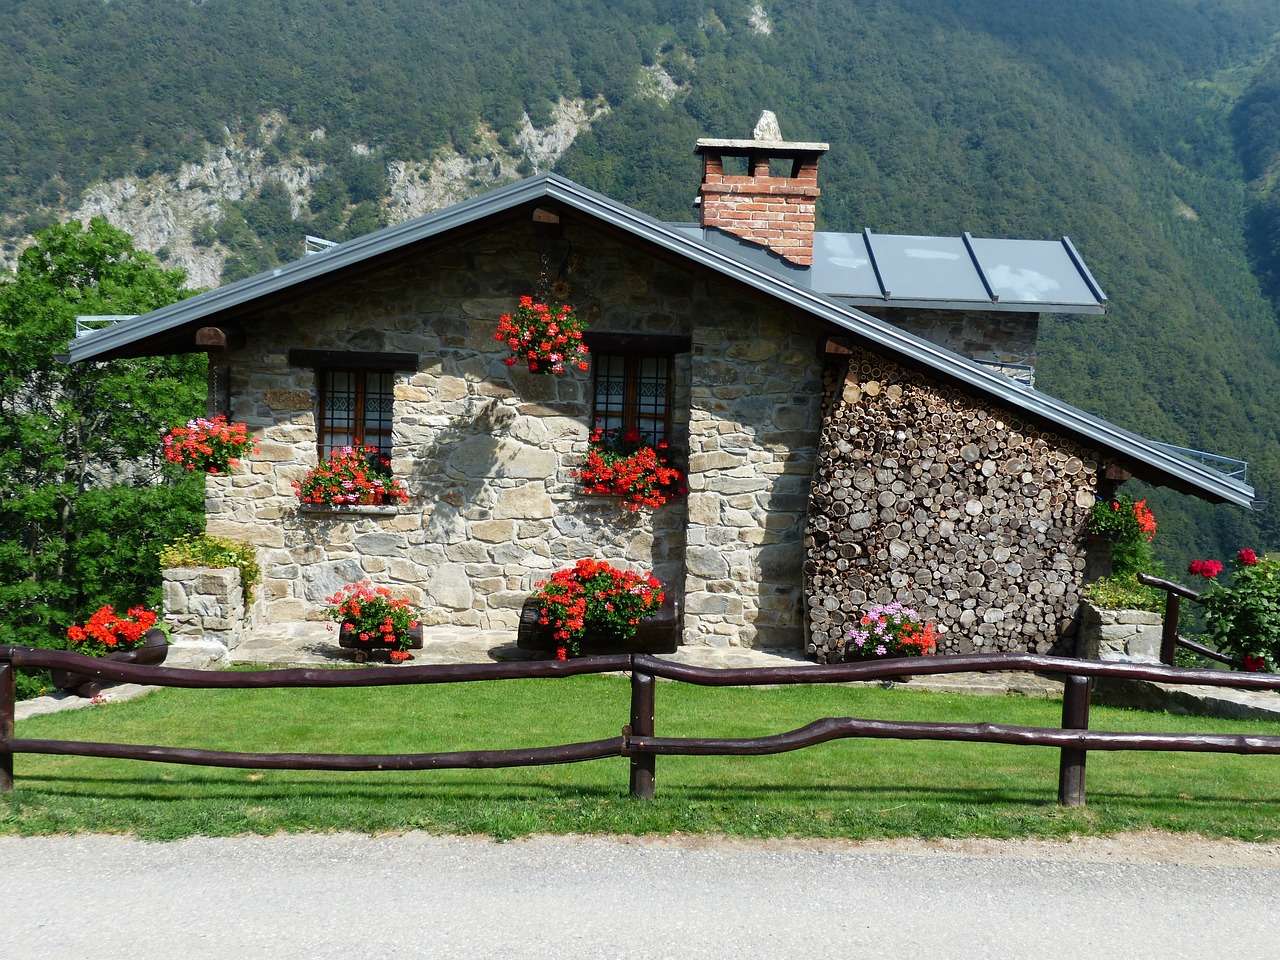 Casa in montagna puzzle online